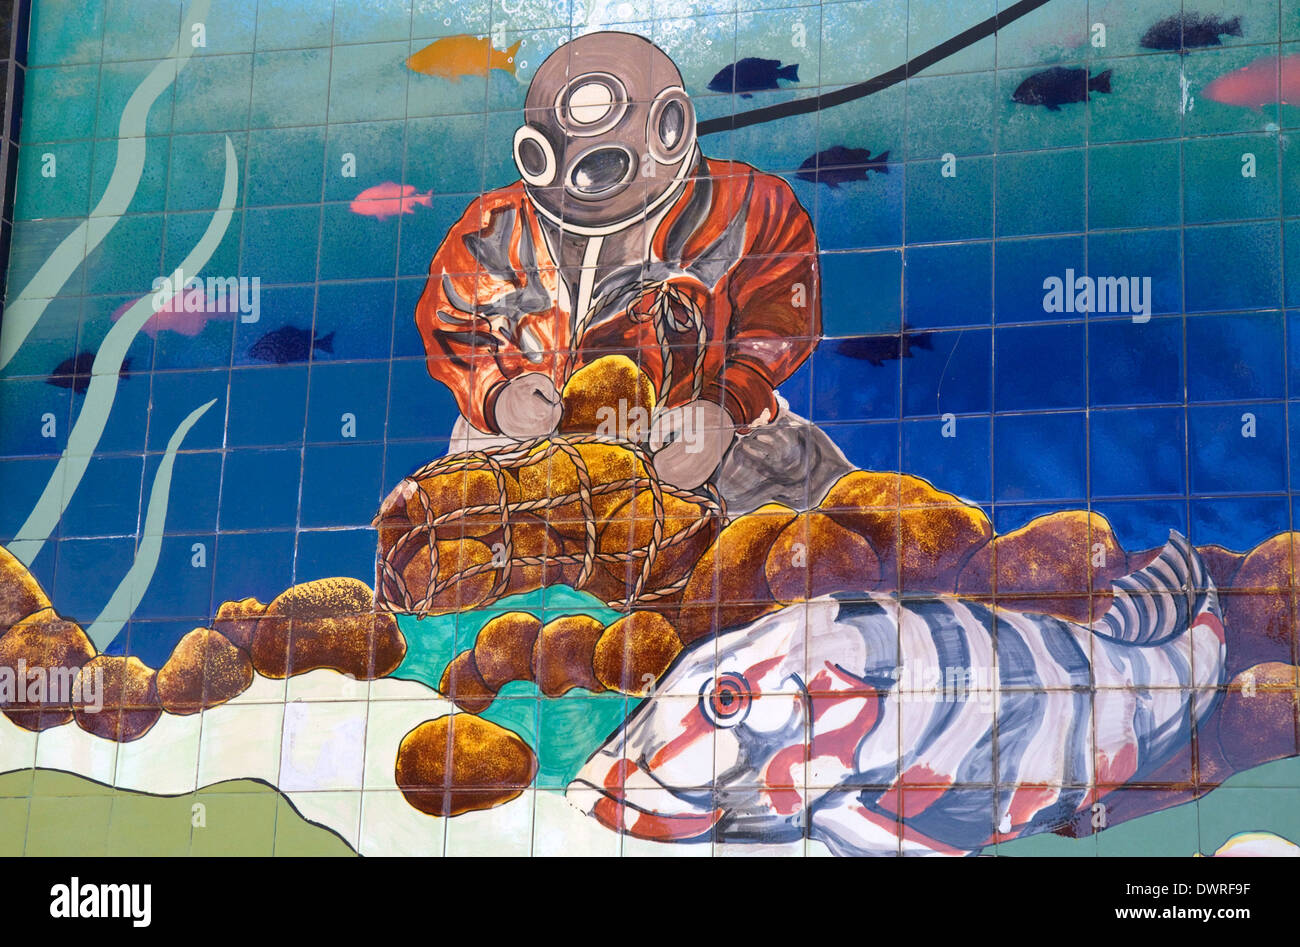 Mosaic tile public art depicting a sponge diver at Tarpon Springs, Florida, USA. Stock Photo